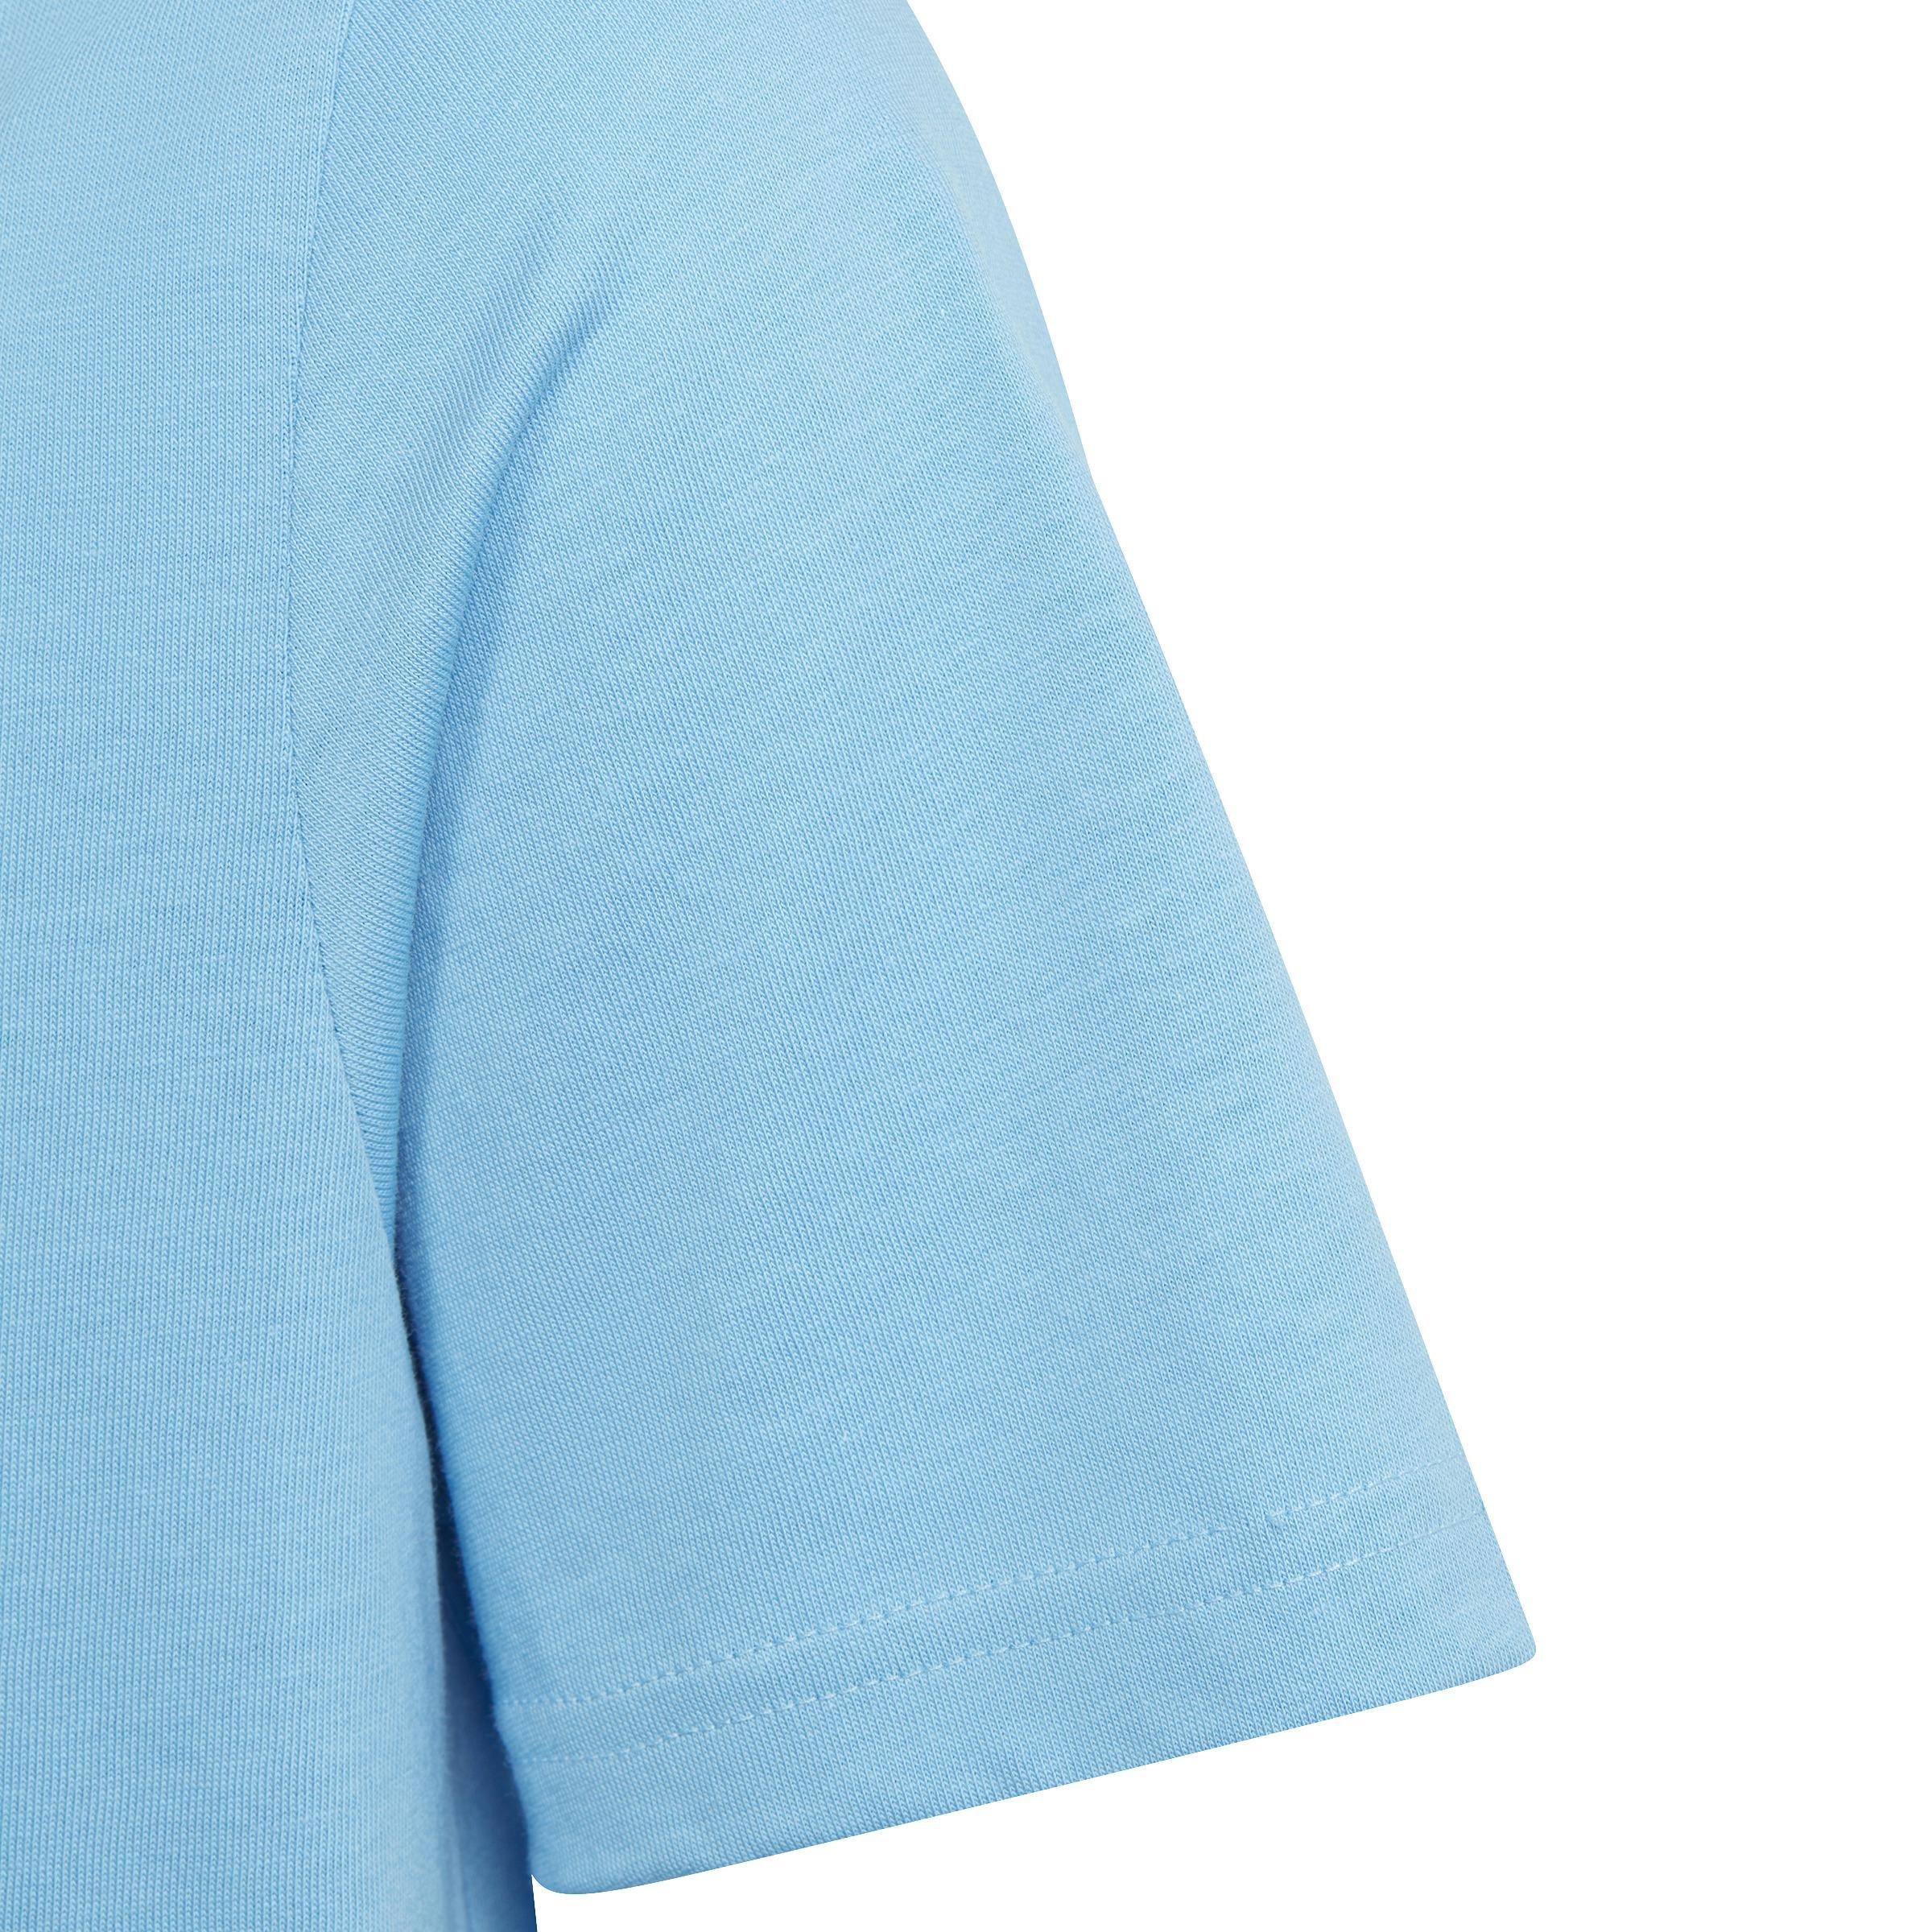 adidas - Kids Unisex Essentials Two-Color Big Logo Cotton T-Shirt, Blue